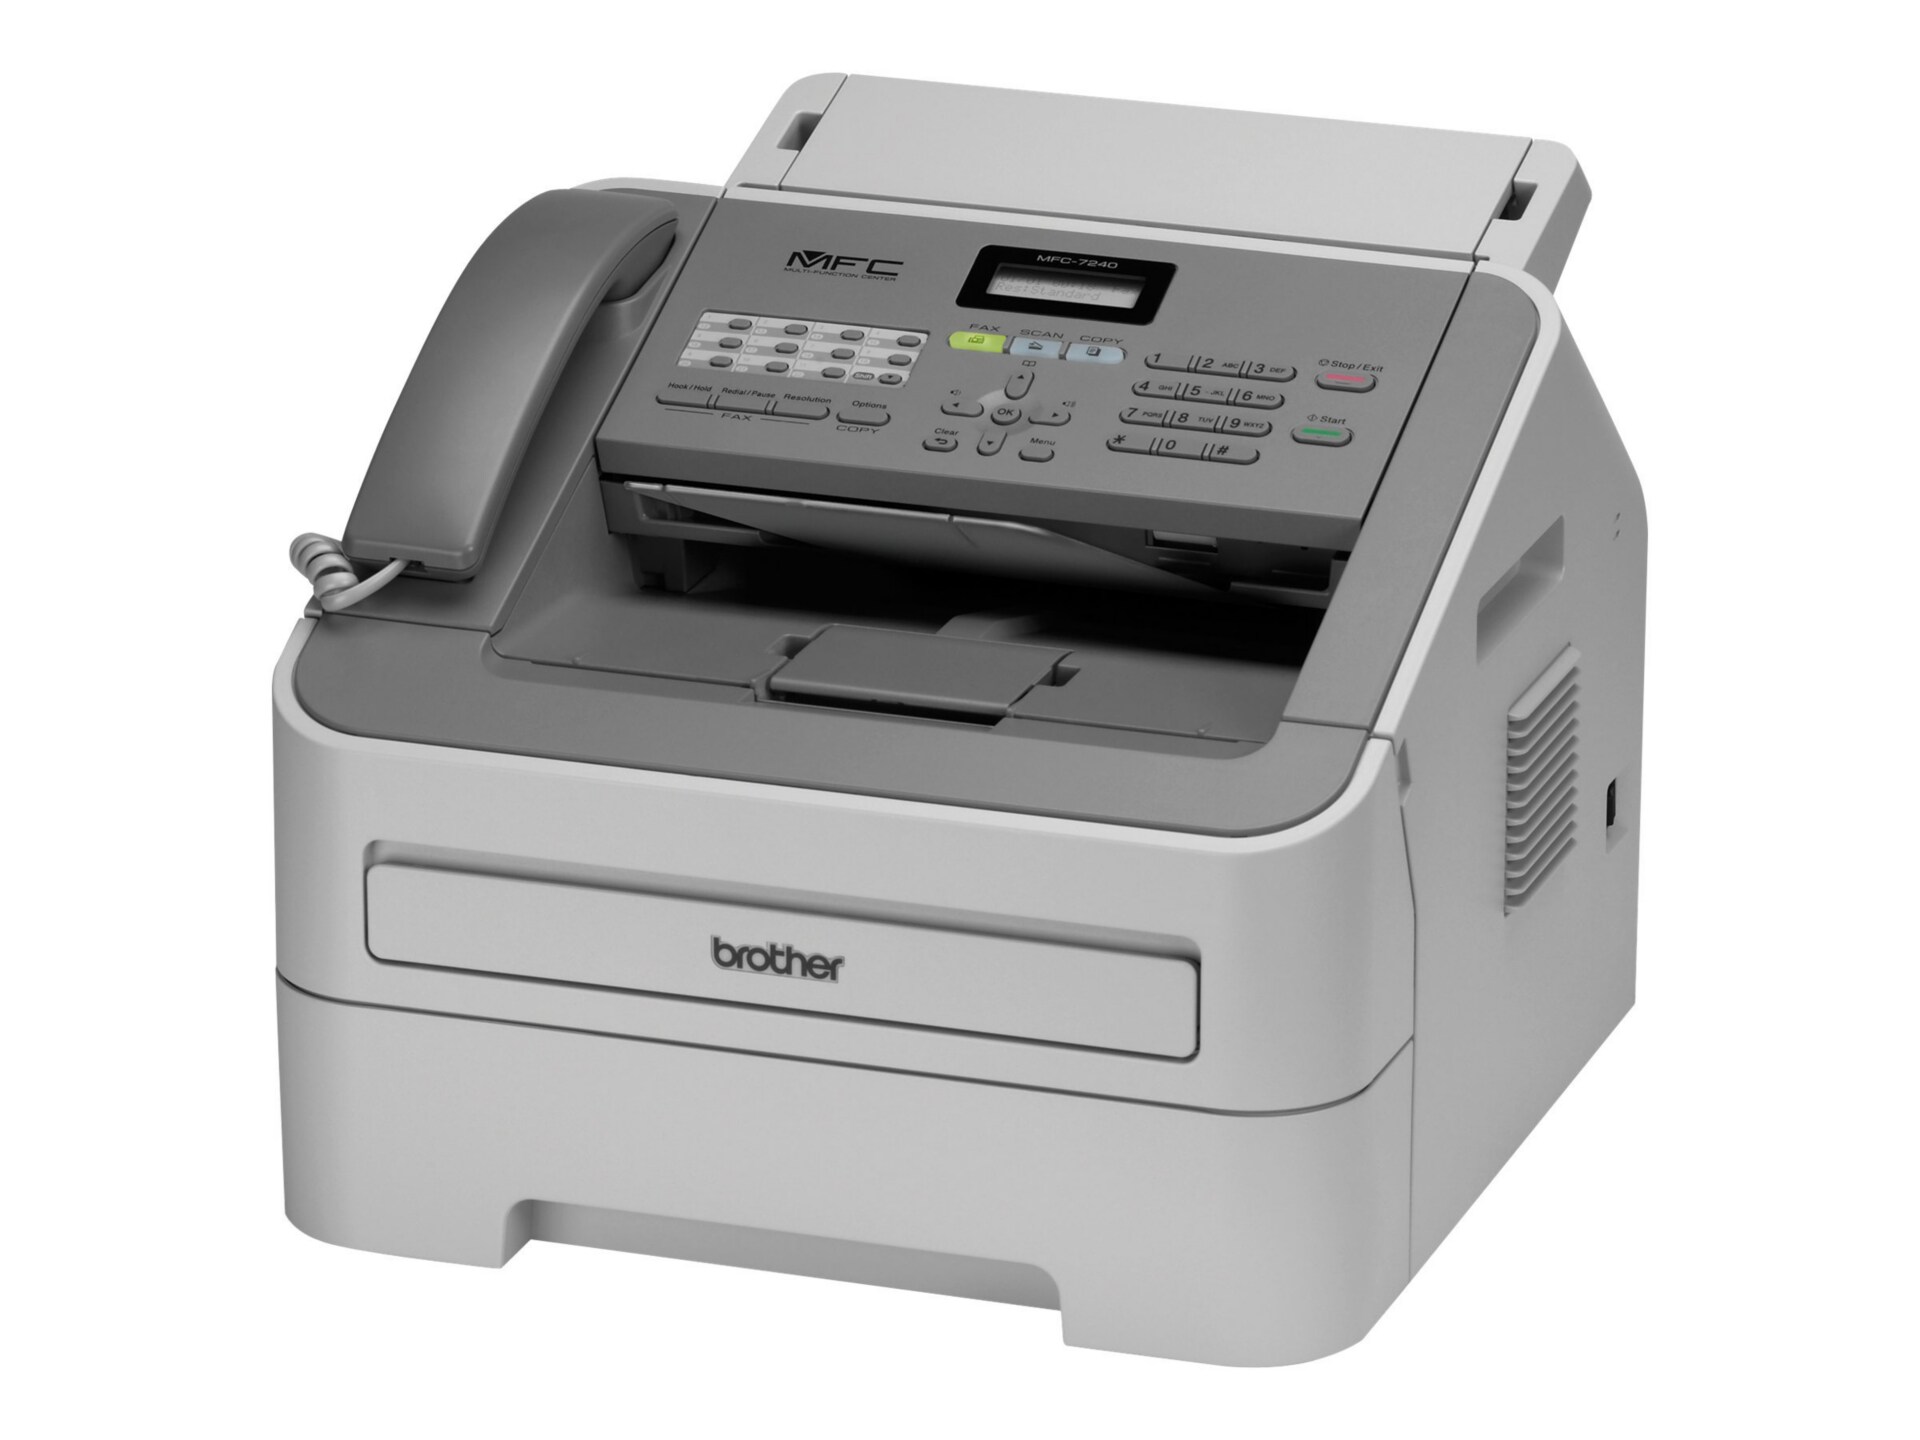 Brother MFC-7240 - multifunction printer - B/W